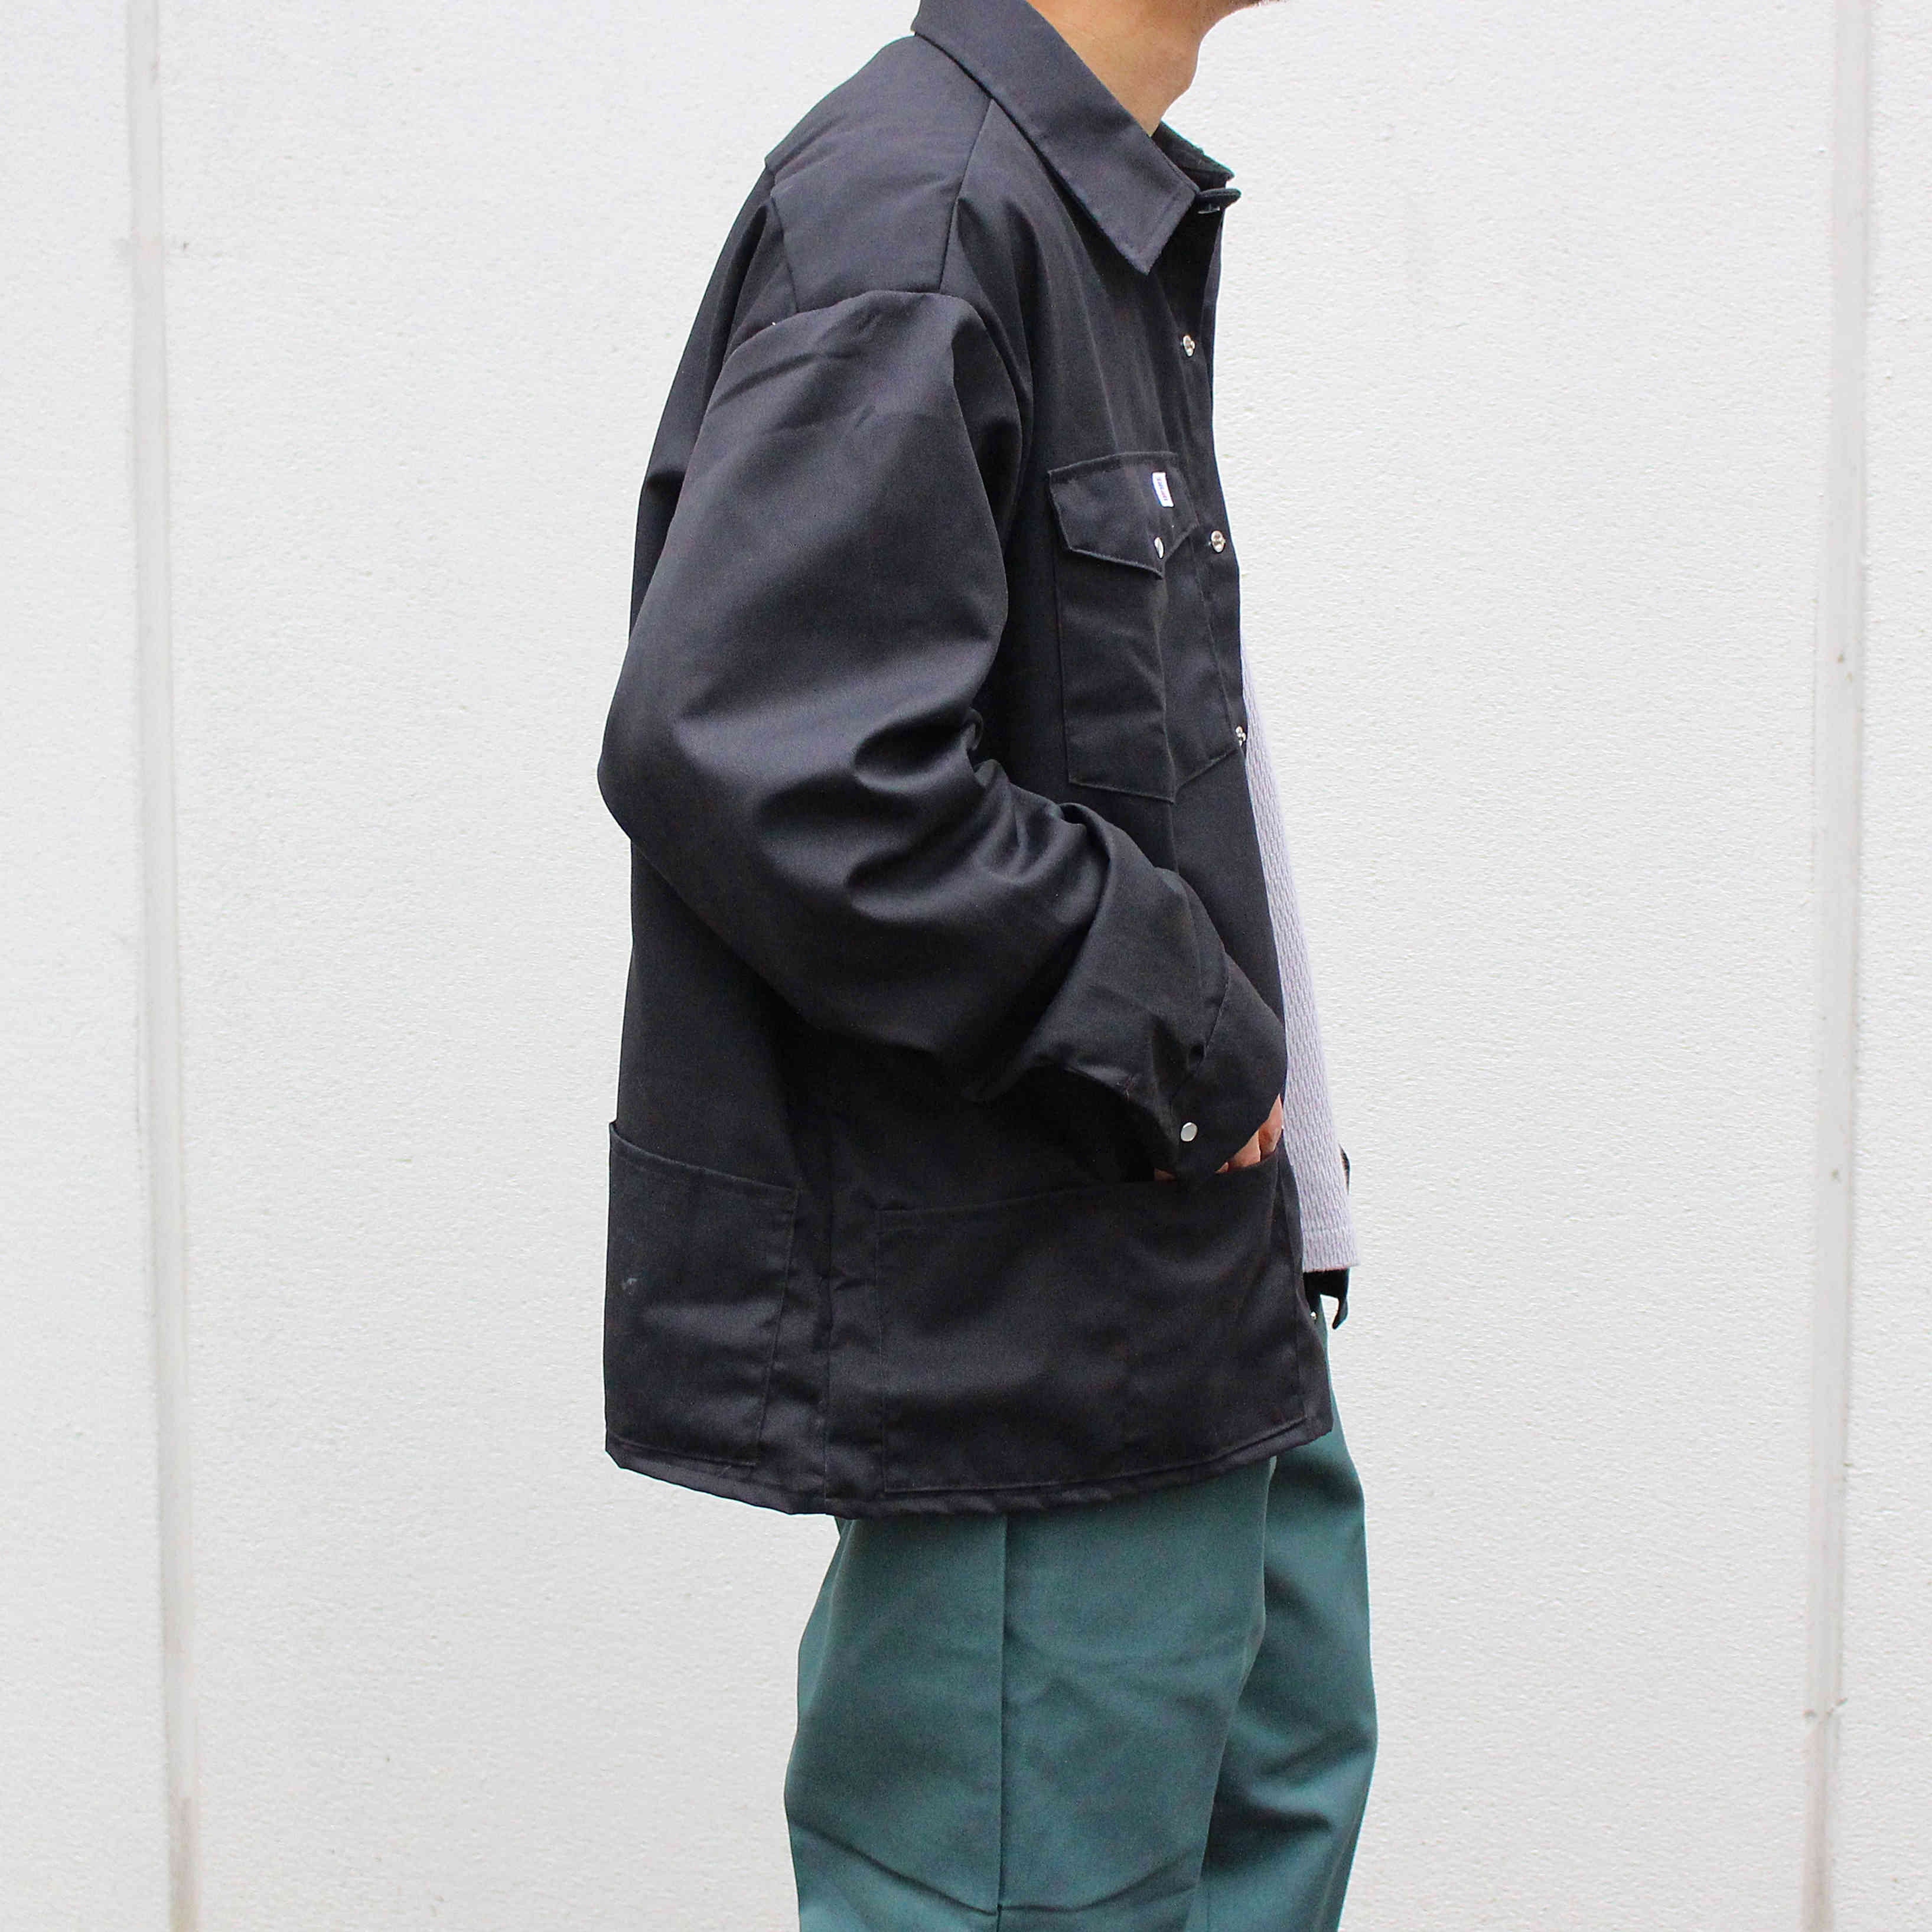 BIG BILL ビックビル / Premium Long Sleeve Snap Front Work Shirt 5 Pocket Big Box (BLACK ブラック)